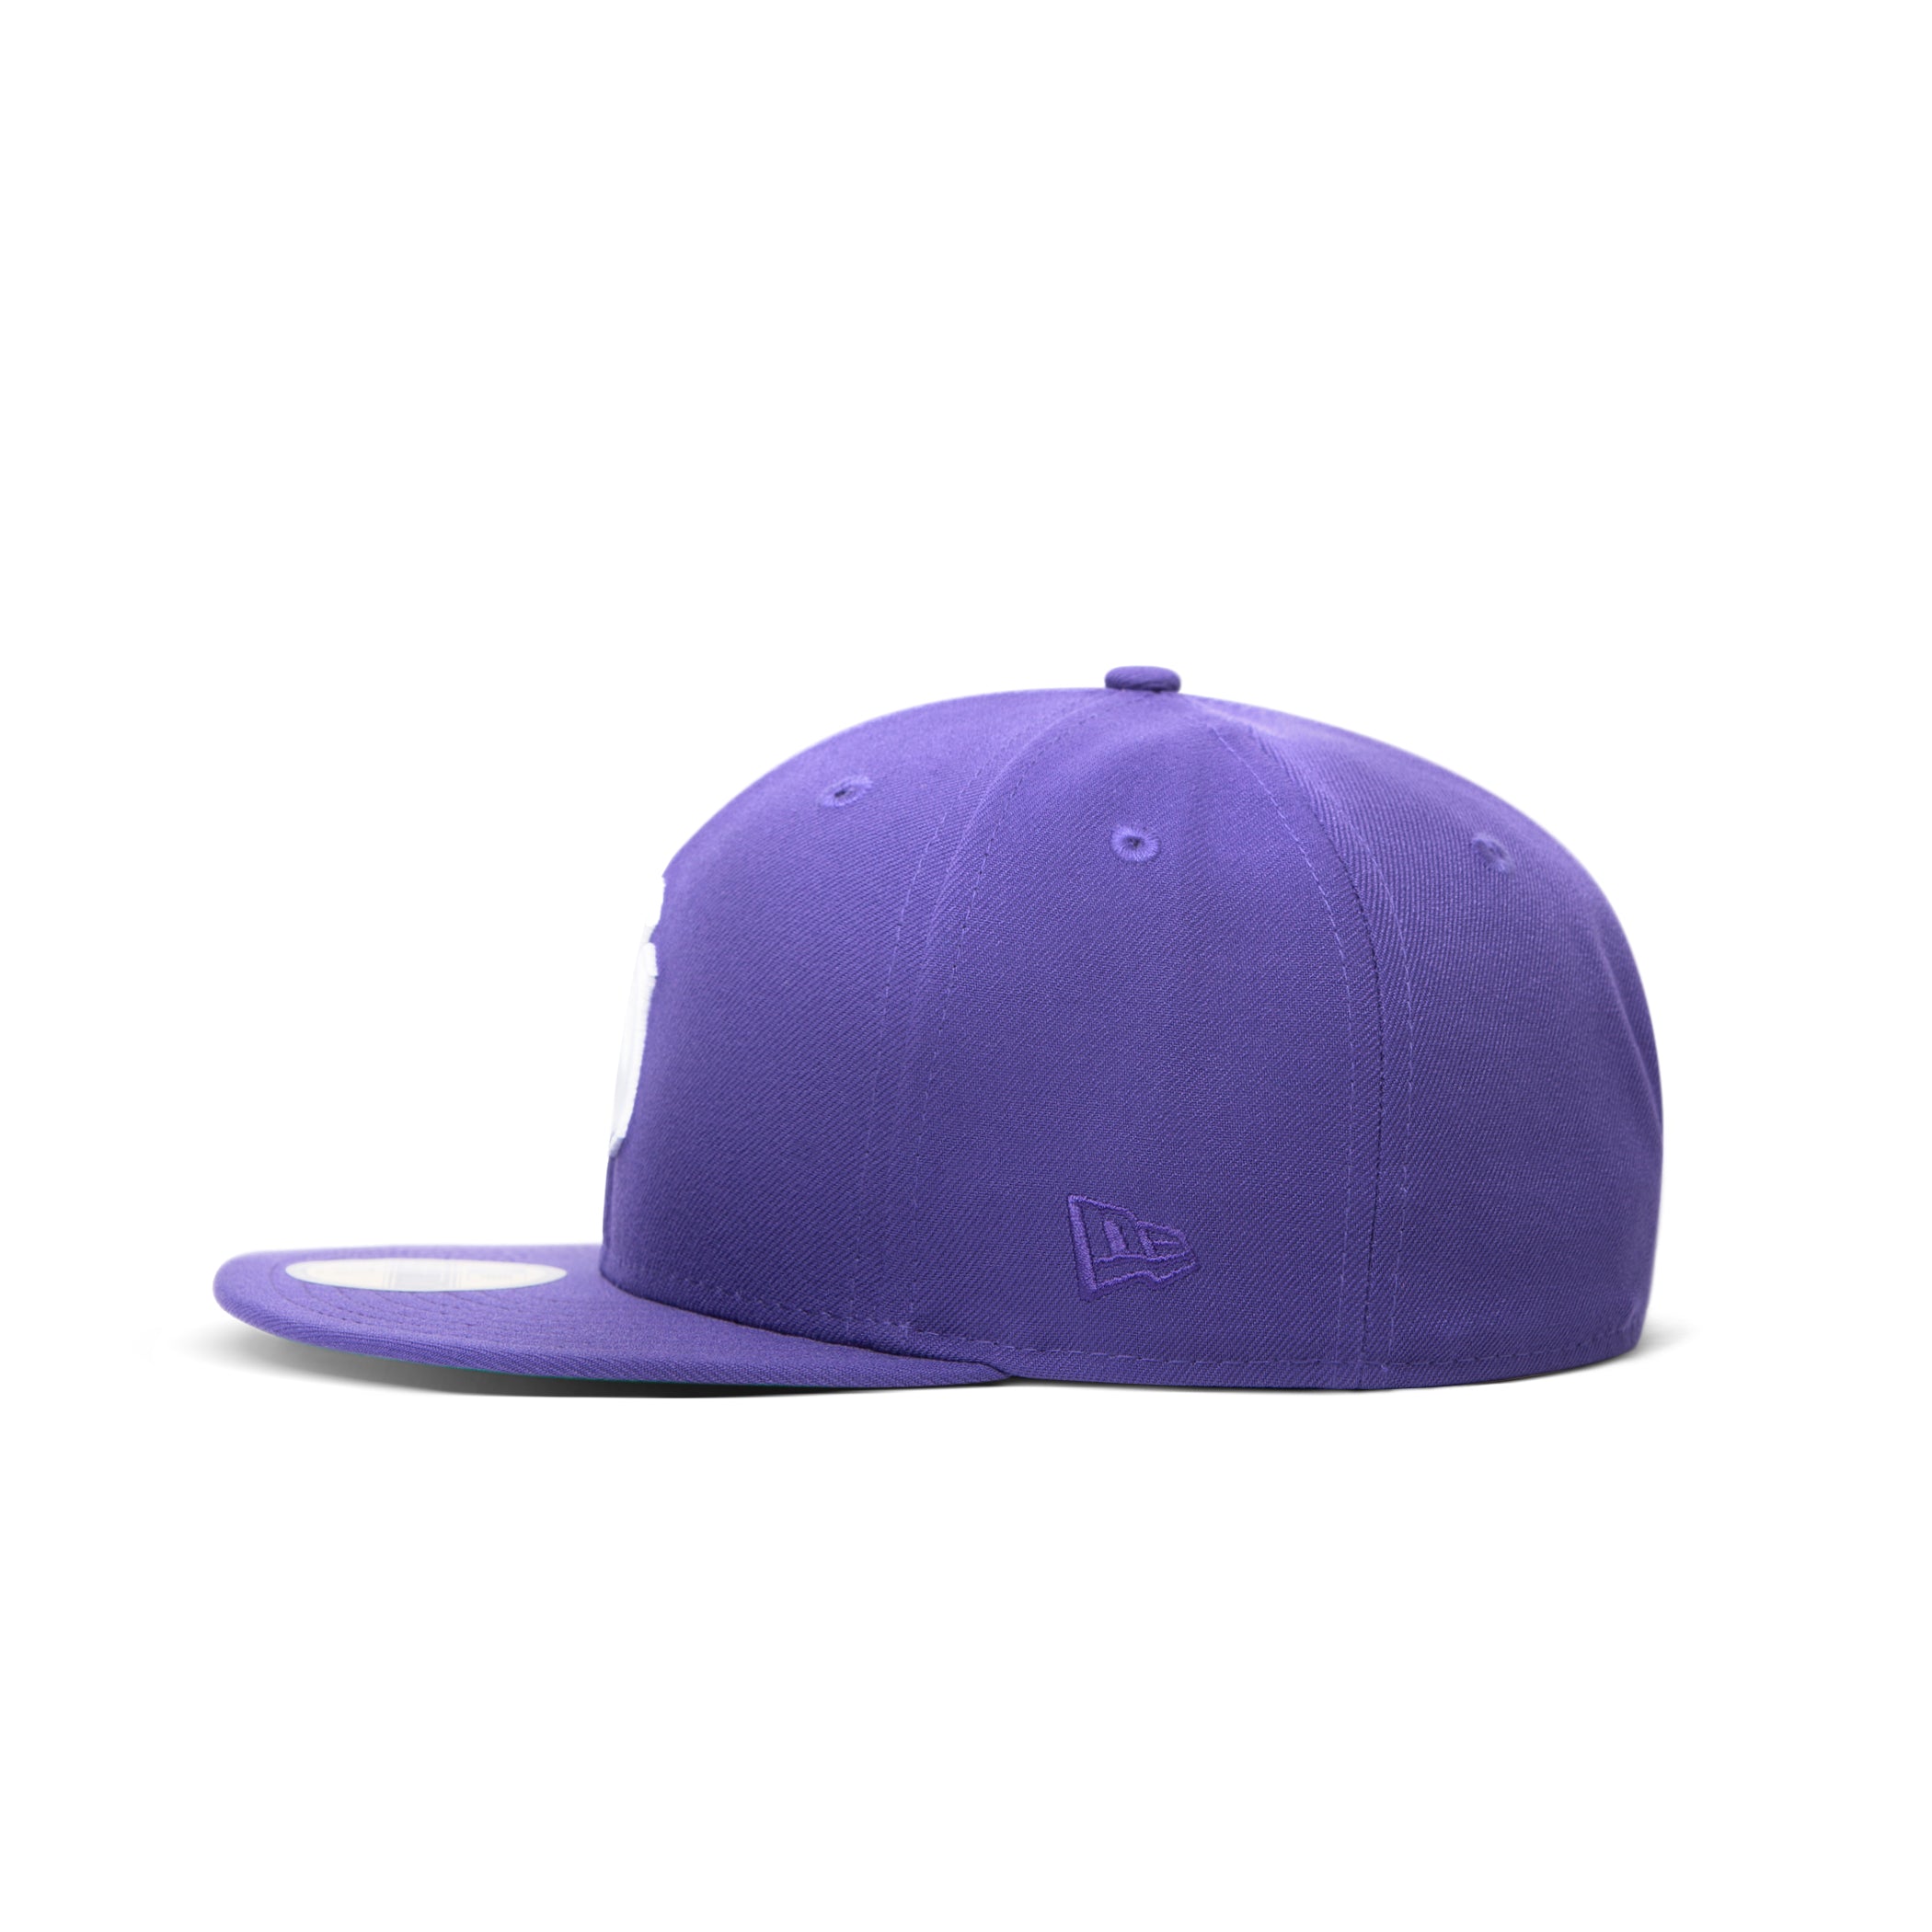 Co Branded Yankee Hat – Project Purple